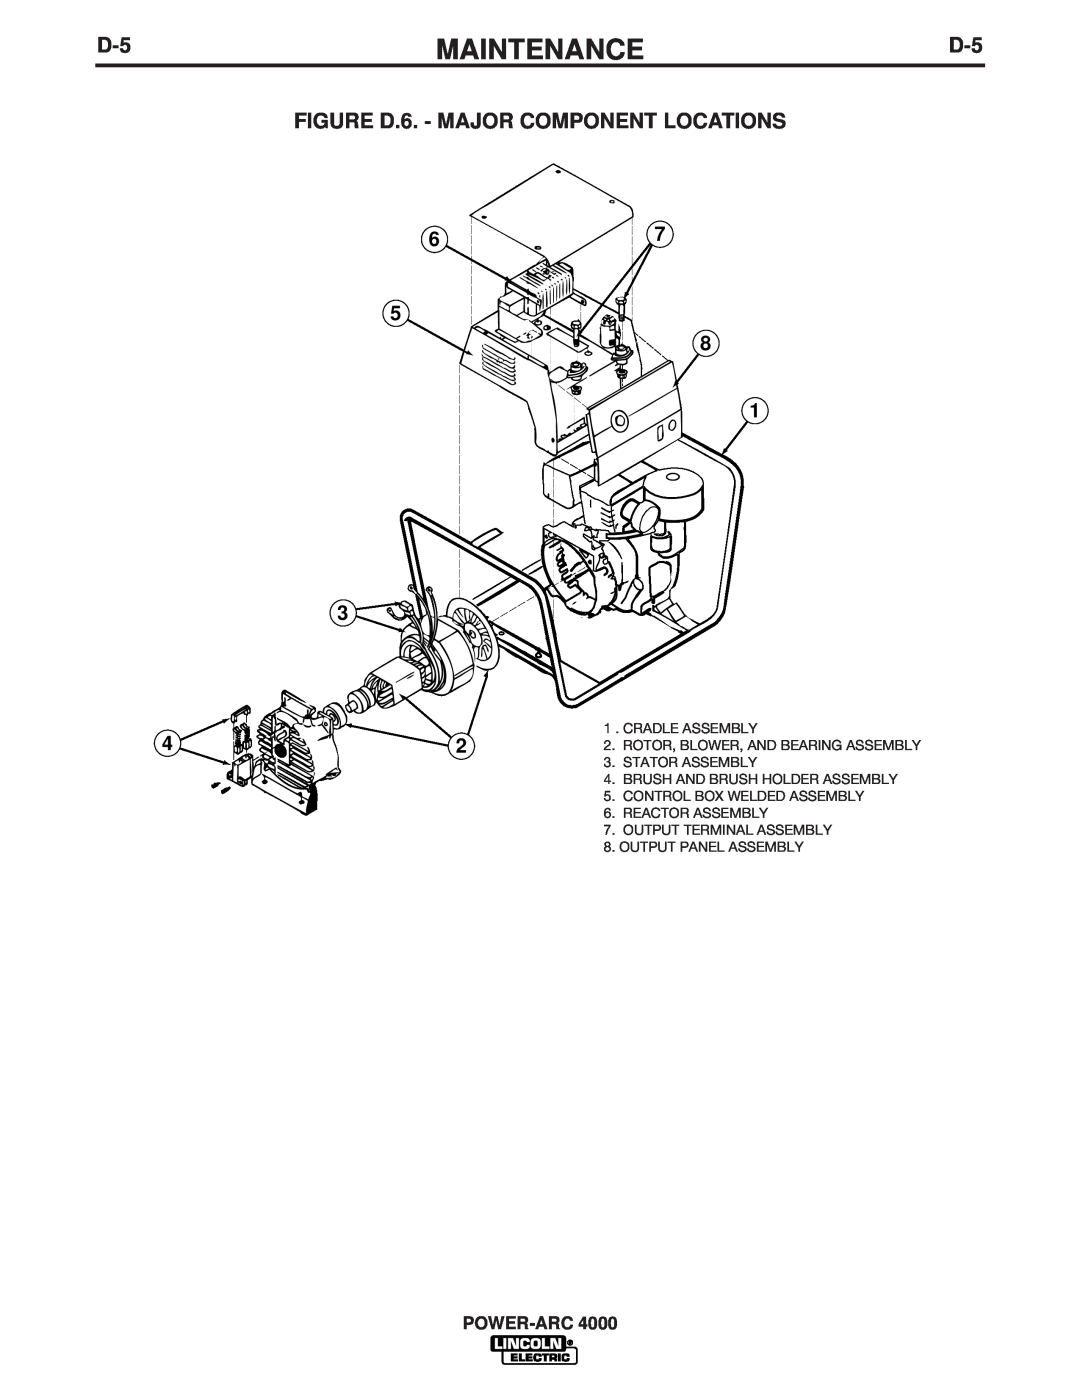 Lincoln Electric 4000 manual FIGURE D.6. - MAJOR COMPONENT LOCATIONS, Maintenance, Power-Arc 